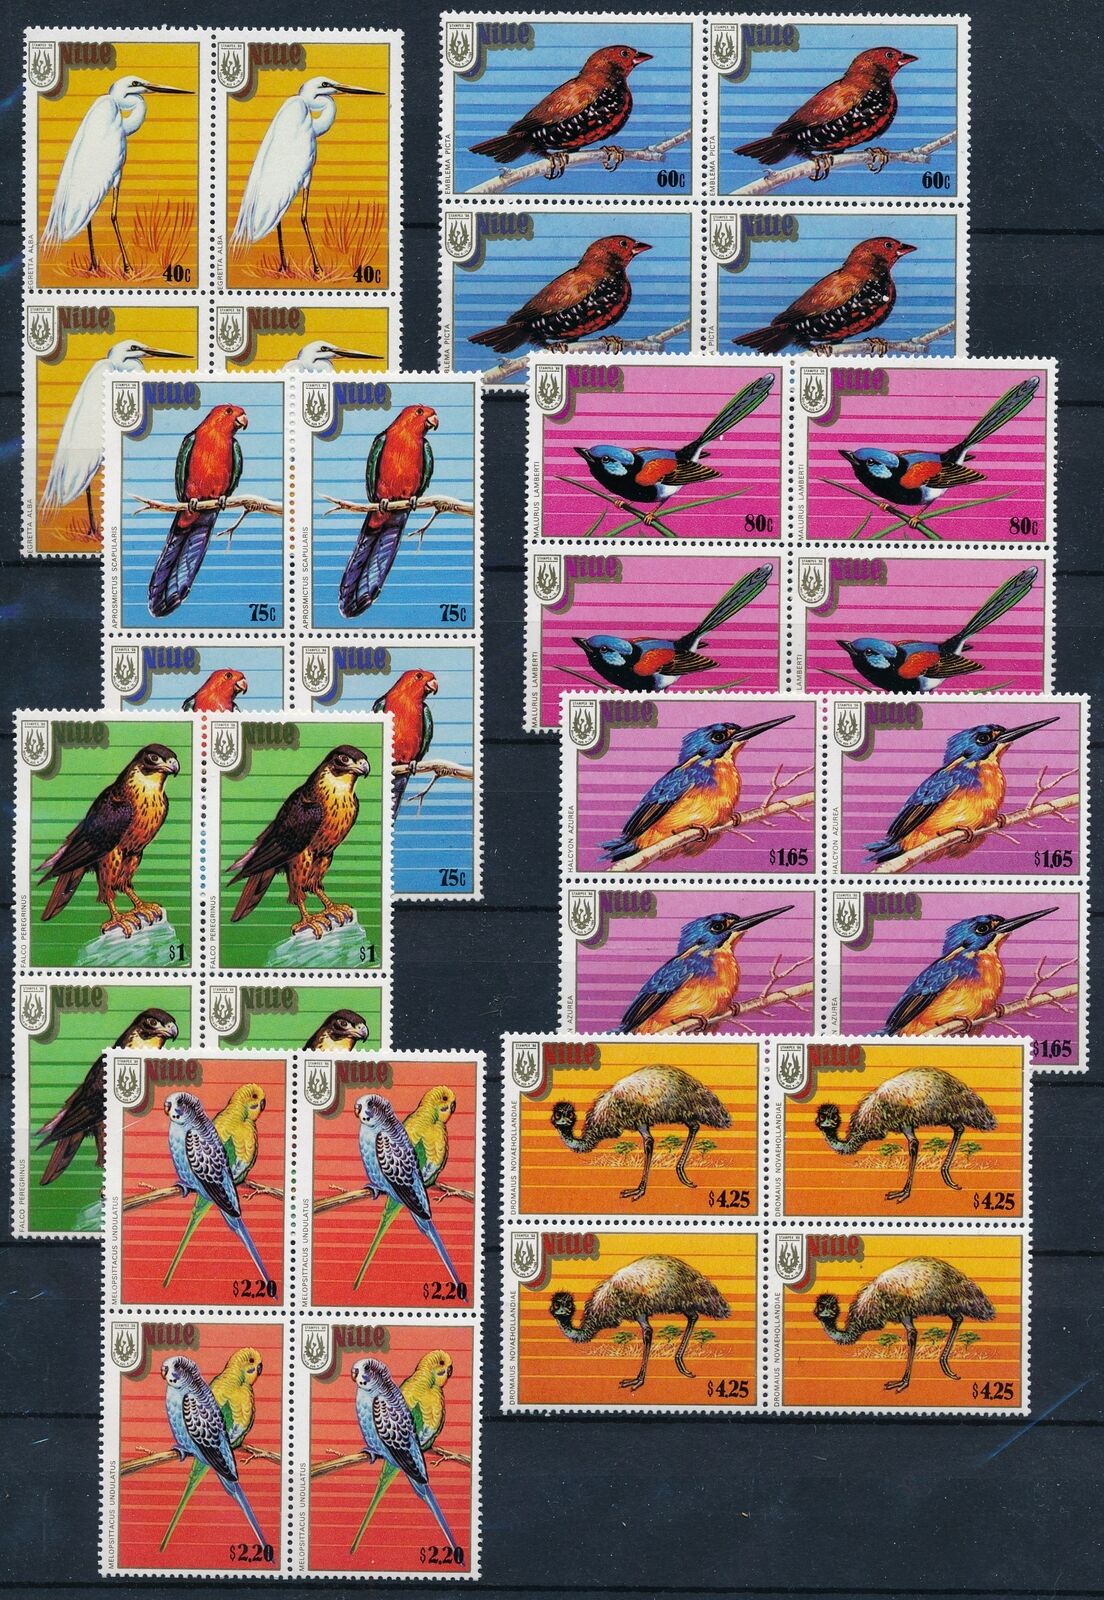 [PG20155] Niue 1986 : Birds - 4x Good Set Very Fine MNH Stamps In Blocks - $190